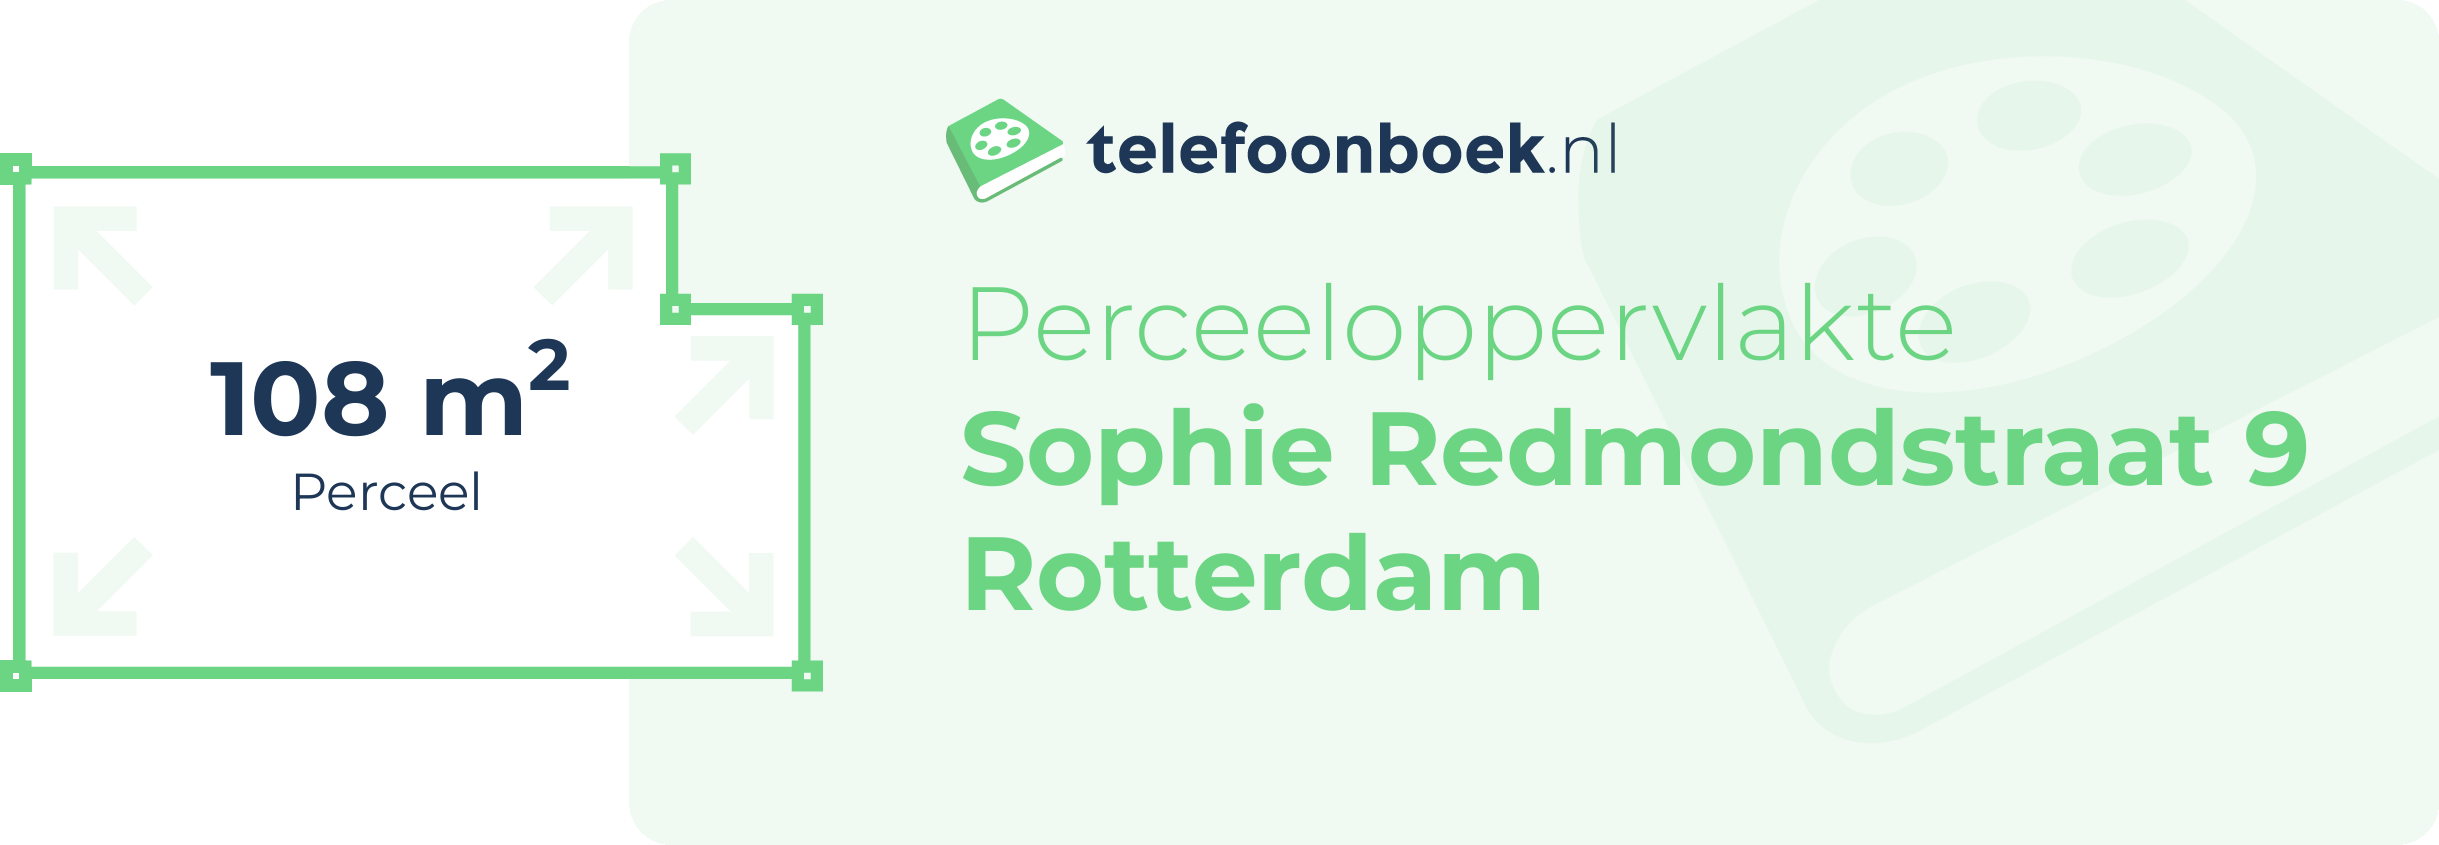 Perceeloppervlakte Sophie Redmondstraat 9 Rotterdam